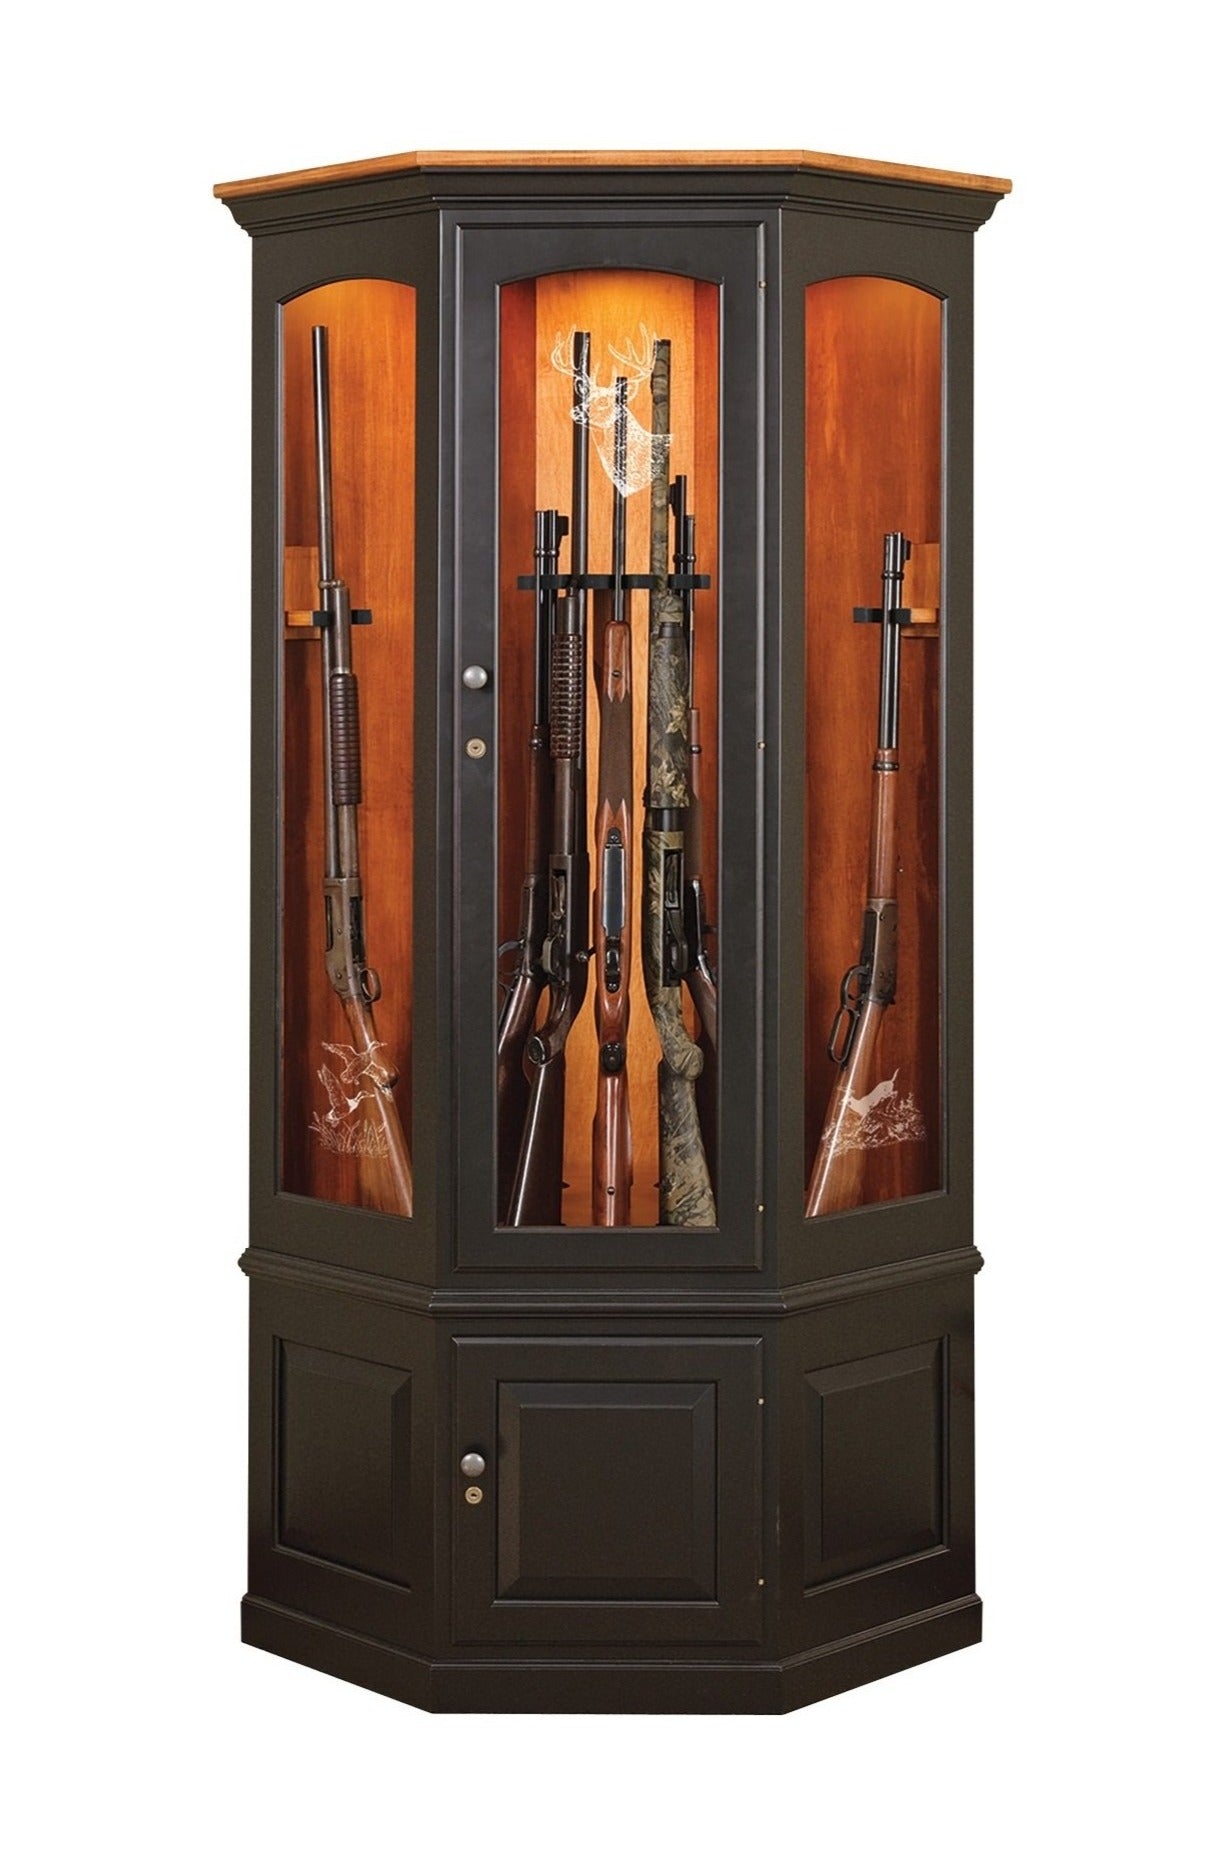 The Revolver - Amish Corner Gun Cabinet with Rotating Gun Rack Carouse -  The Wood Reserve